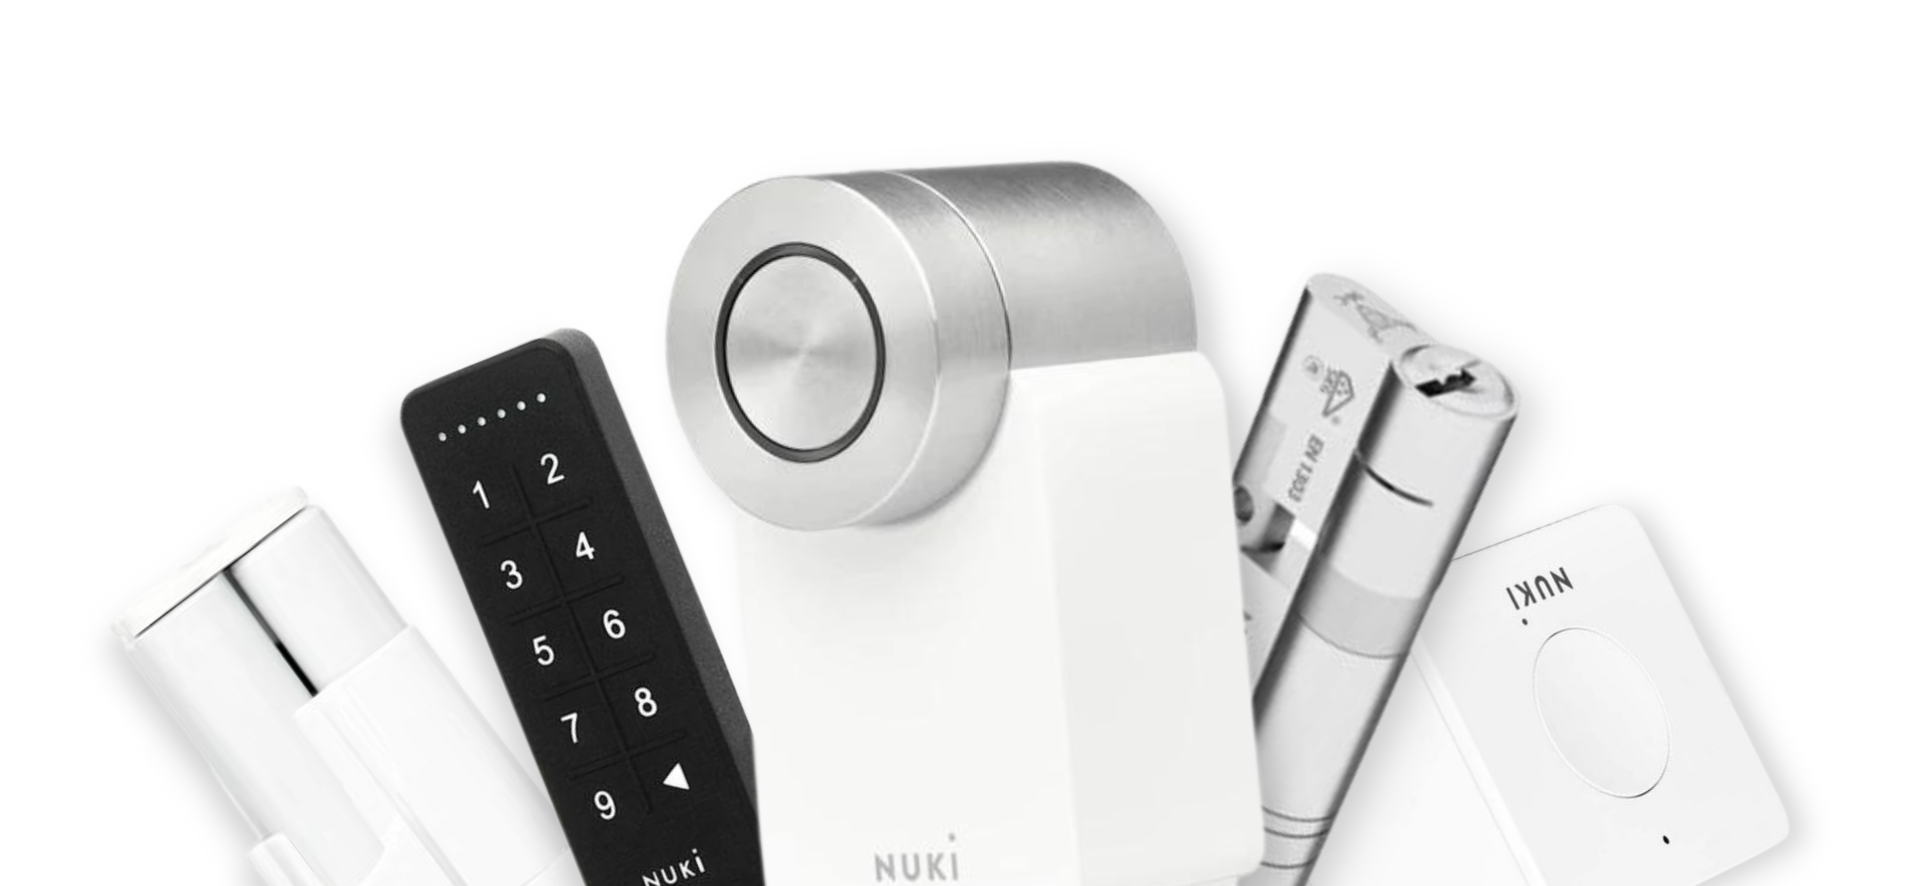 RELEASE] Nuki Manager for Nuki Smart Lock(Approved) - Community